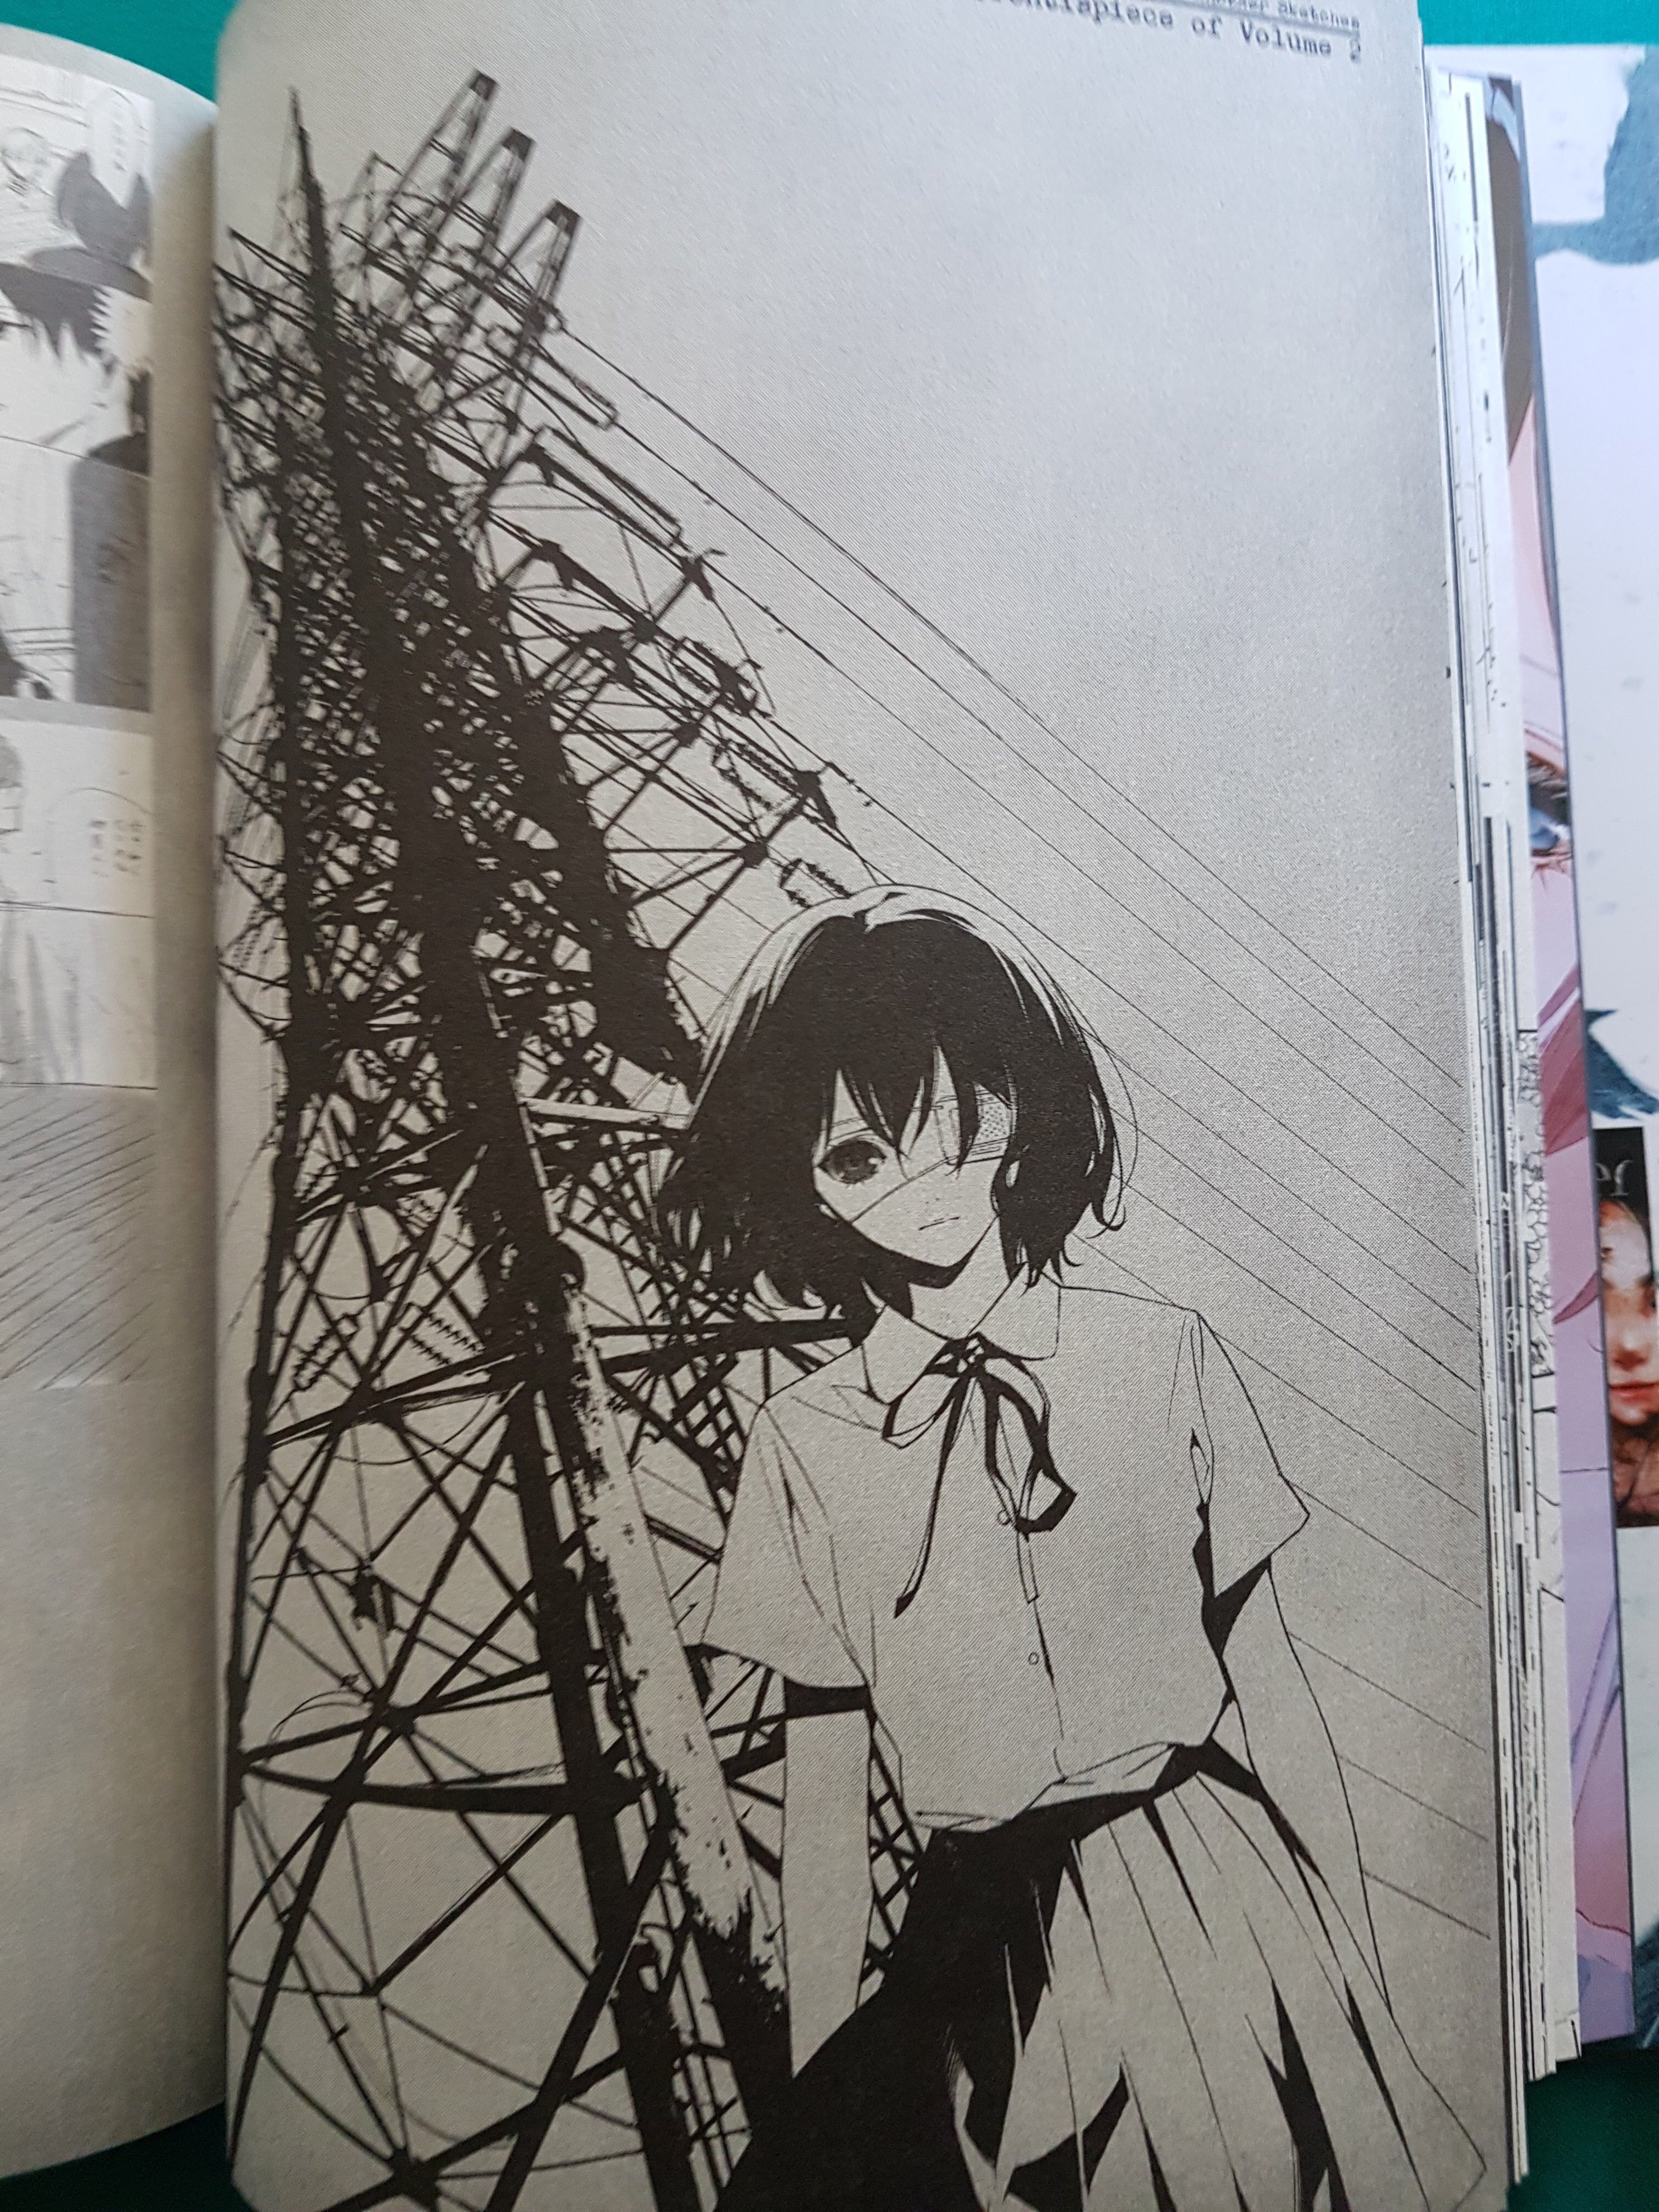 Another Episode S O A Novel Manga By Yukito Ayatsuji 2013 Raistlin0903